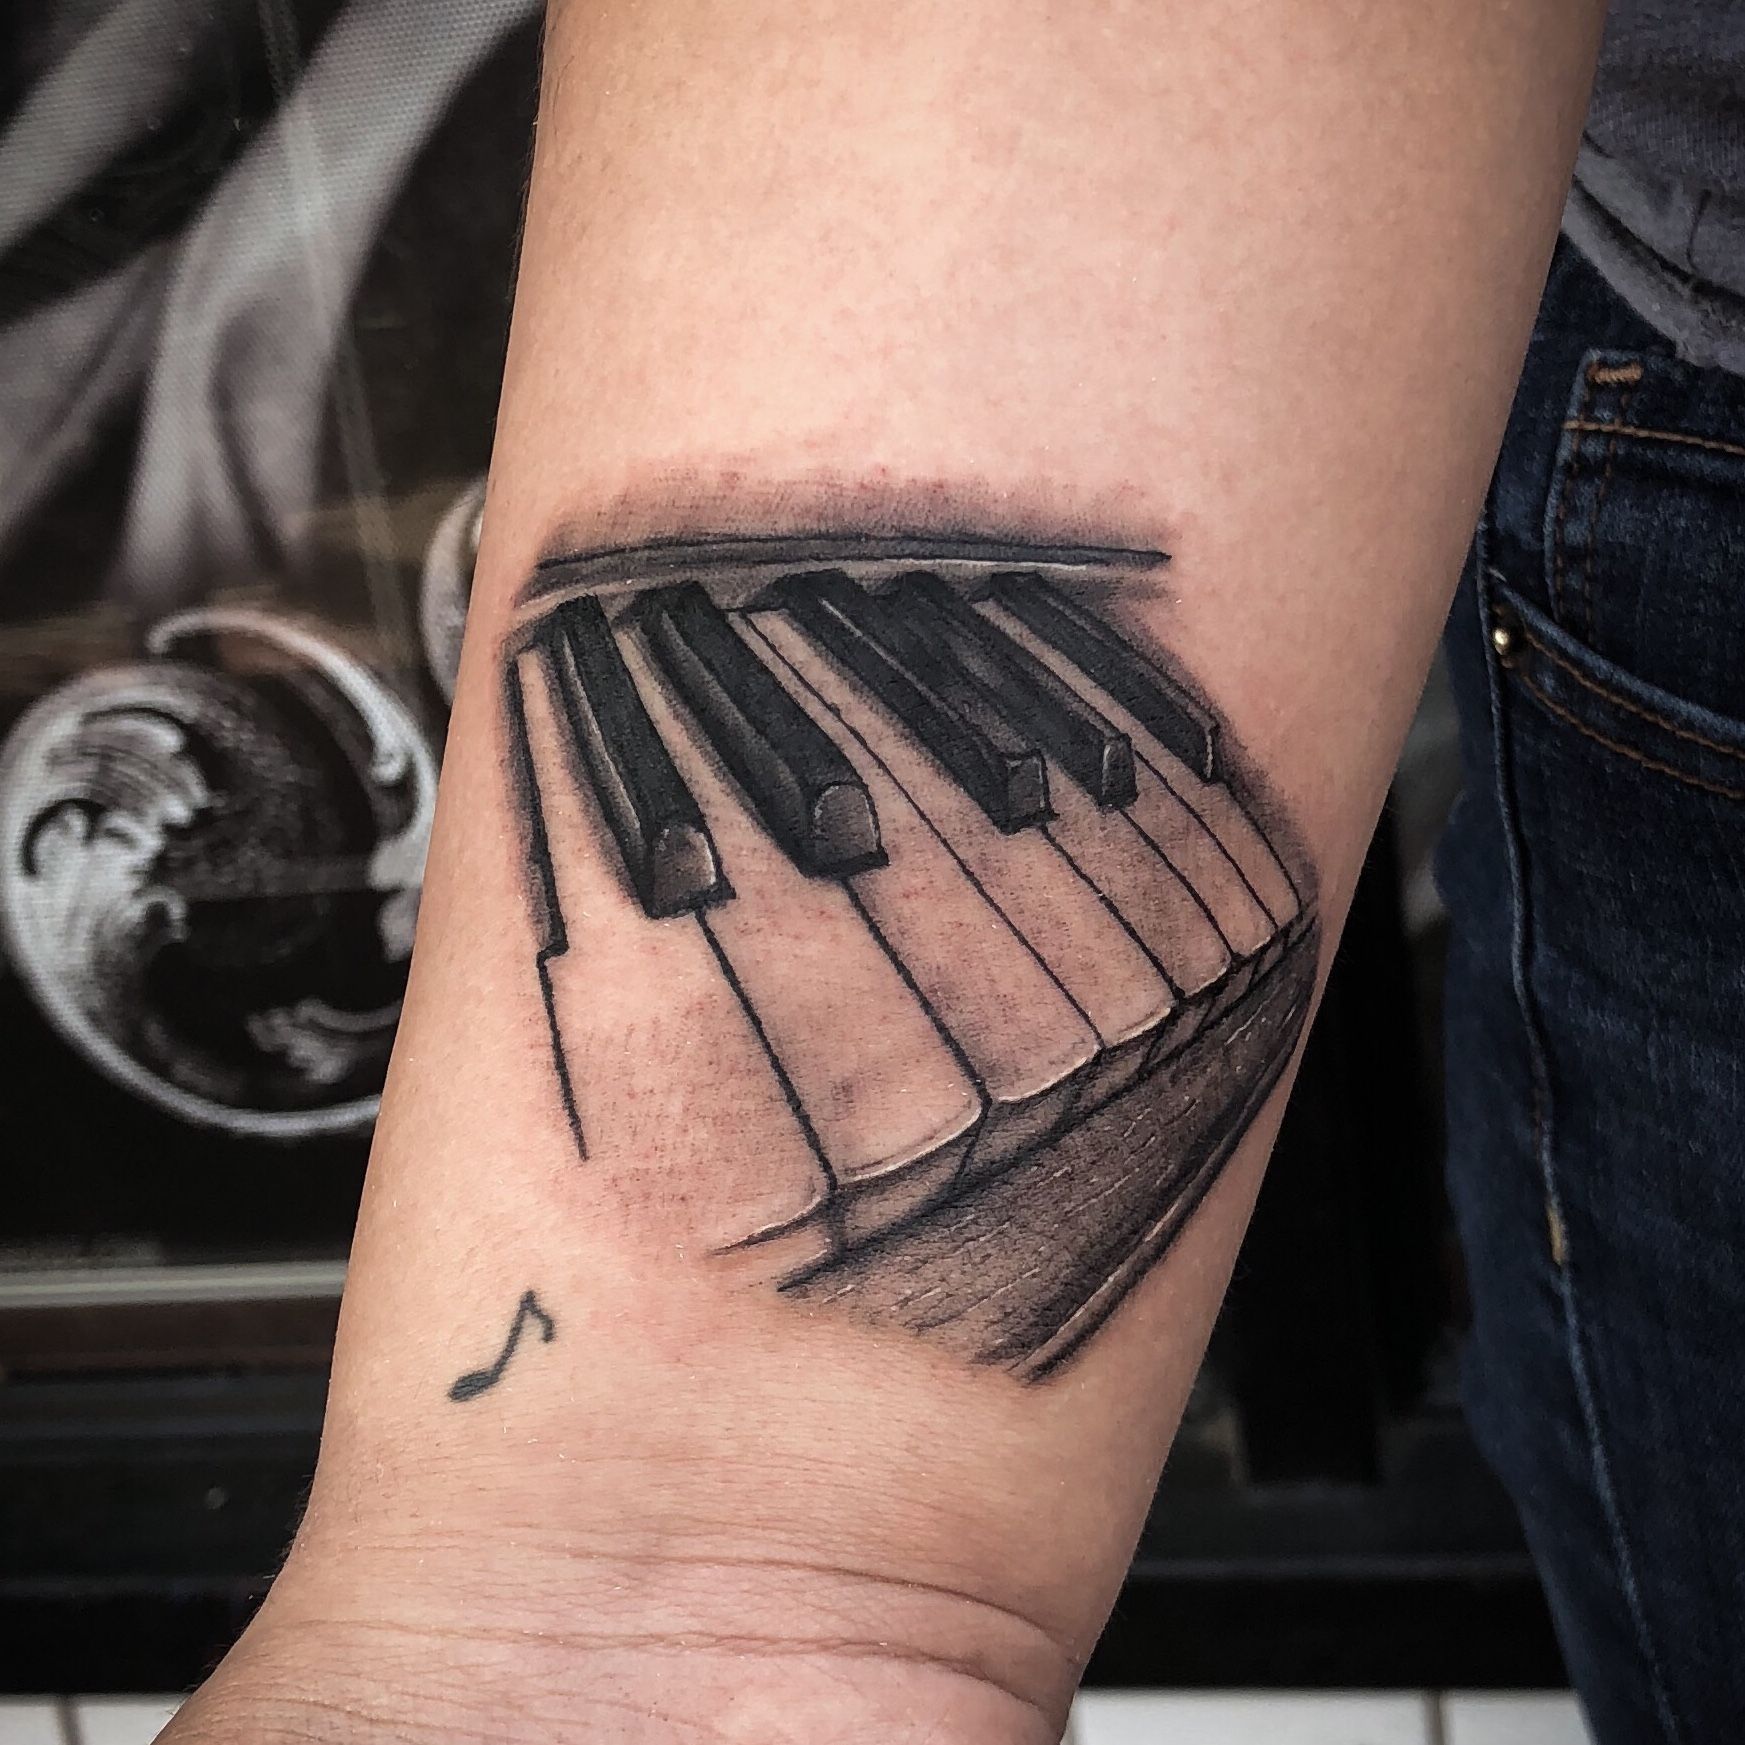 20+ Lovely Piano Tattoo Ideas | Piano tattoo, Music tattoos, Music tattoo  designs